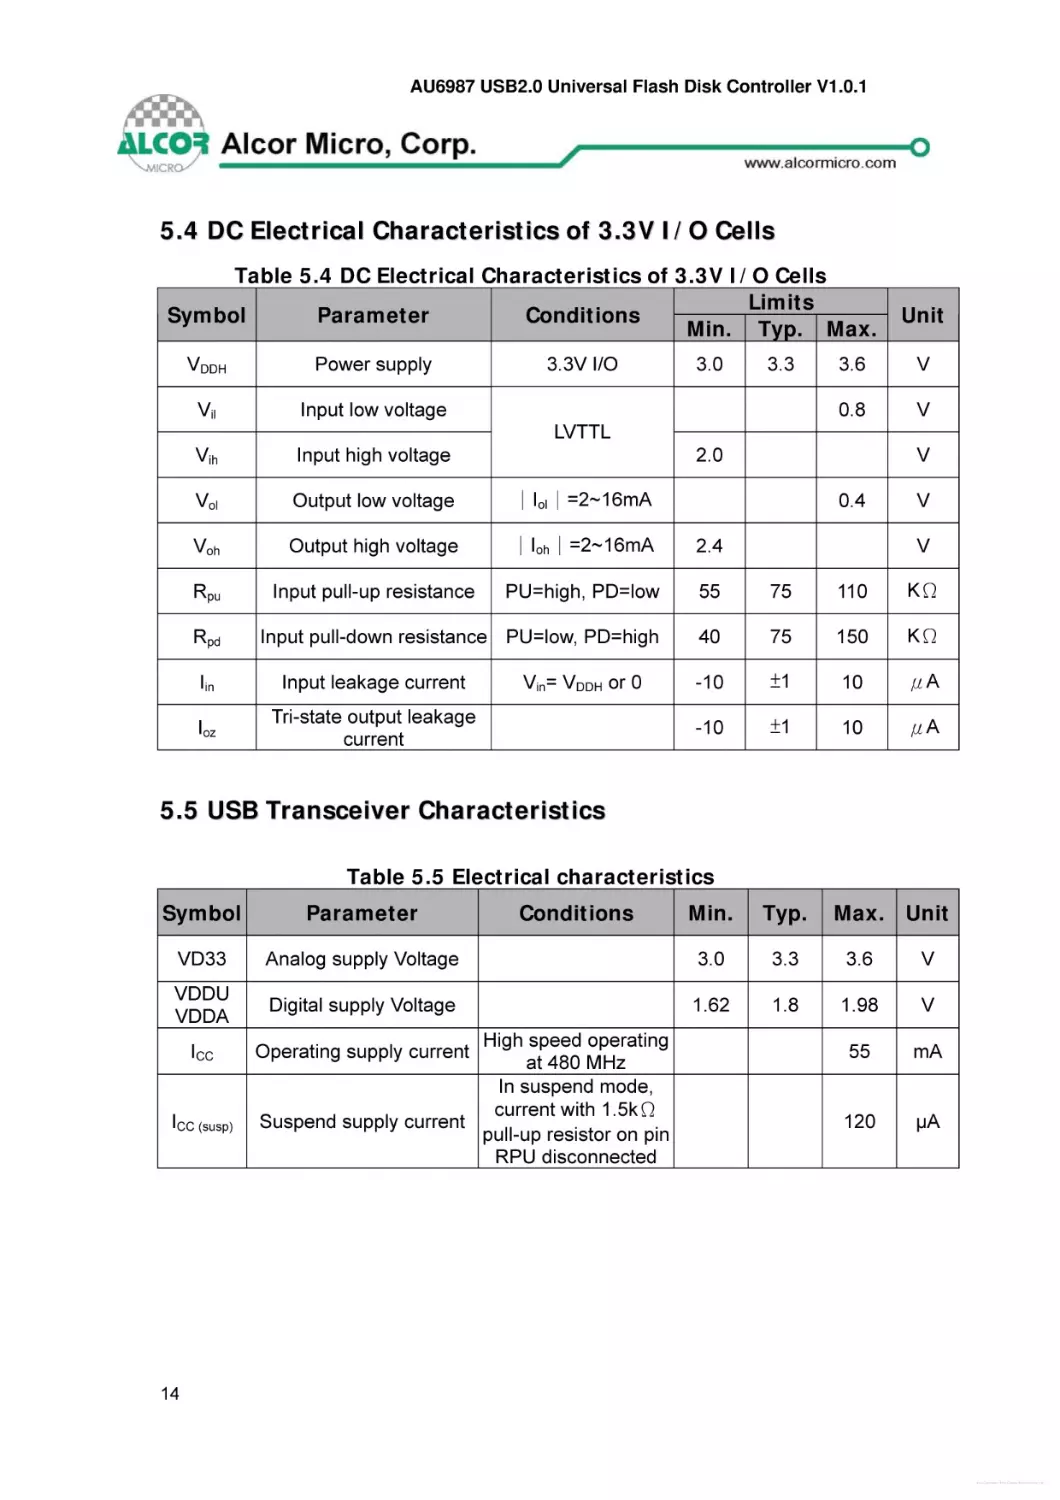 5.4 DC Electrical Characteristics of 3.3V I/O Cells
Table 5.4 DC Electrical Characteristics of 3.3V I/O Cells
5.5 USB Transceiver Characteristics
Table 5.5 Electrical characteristics